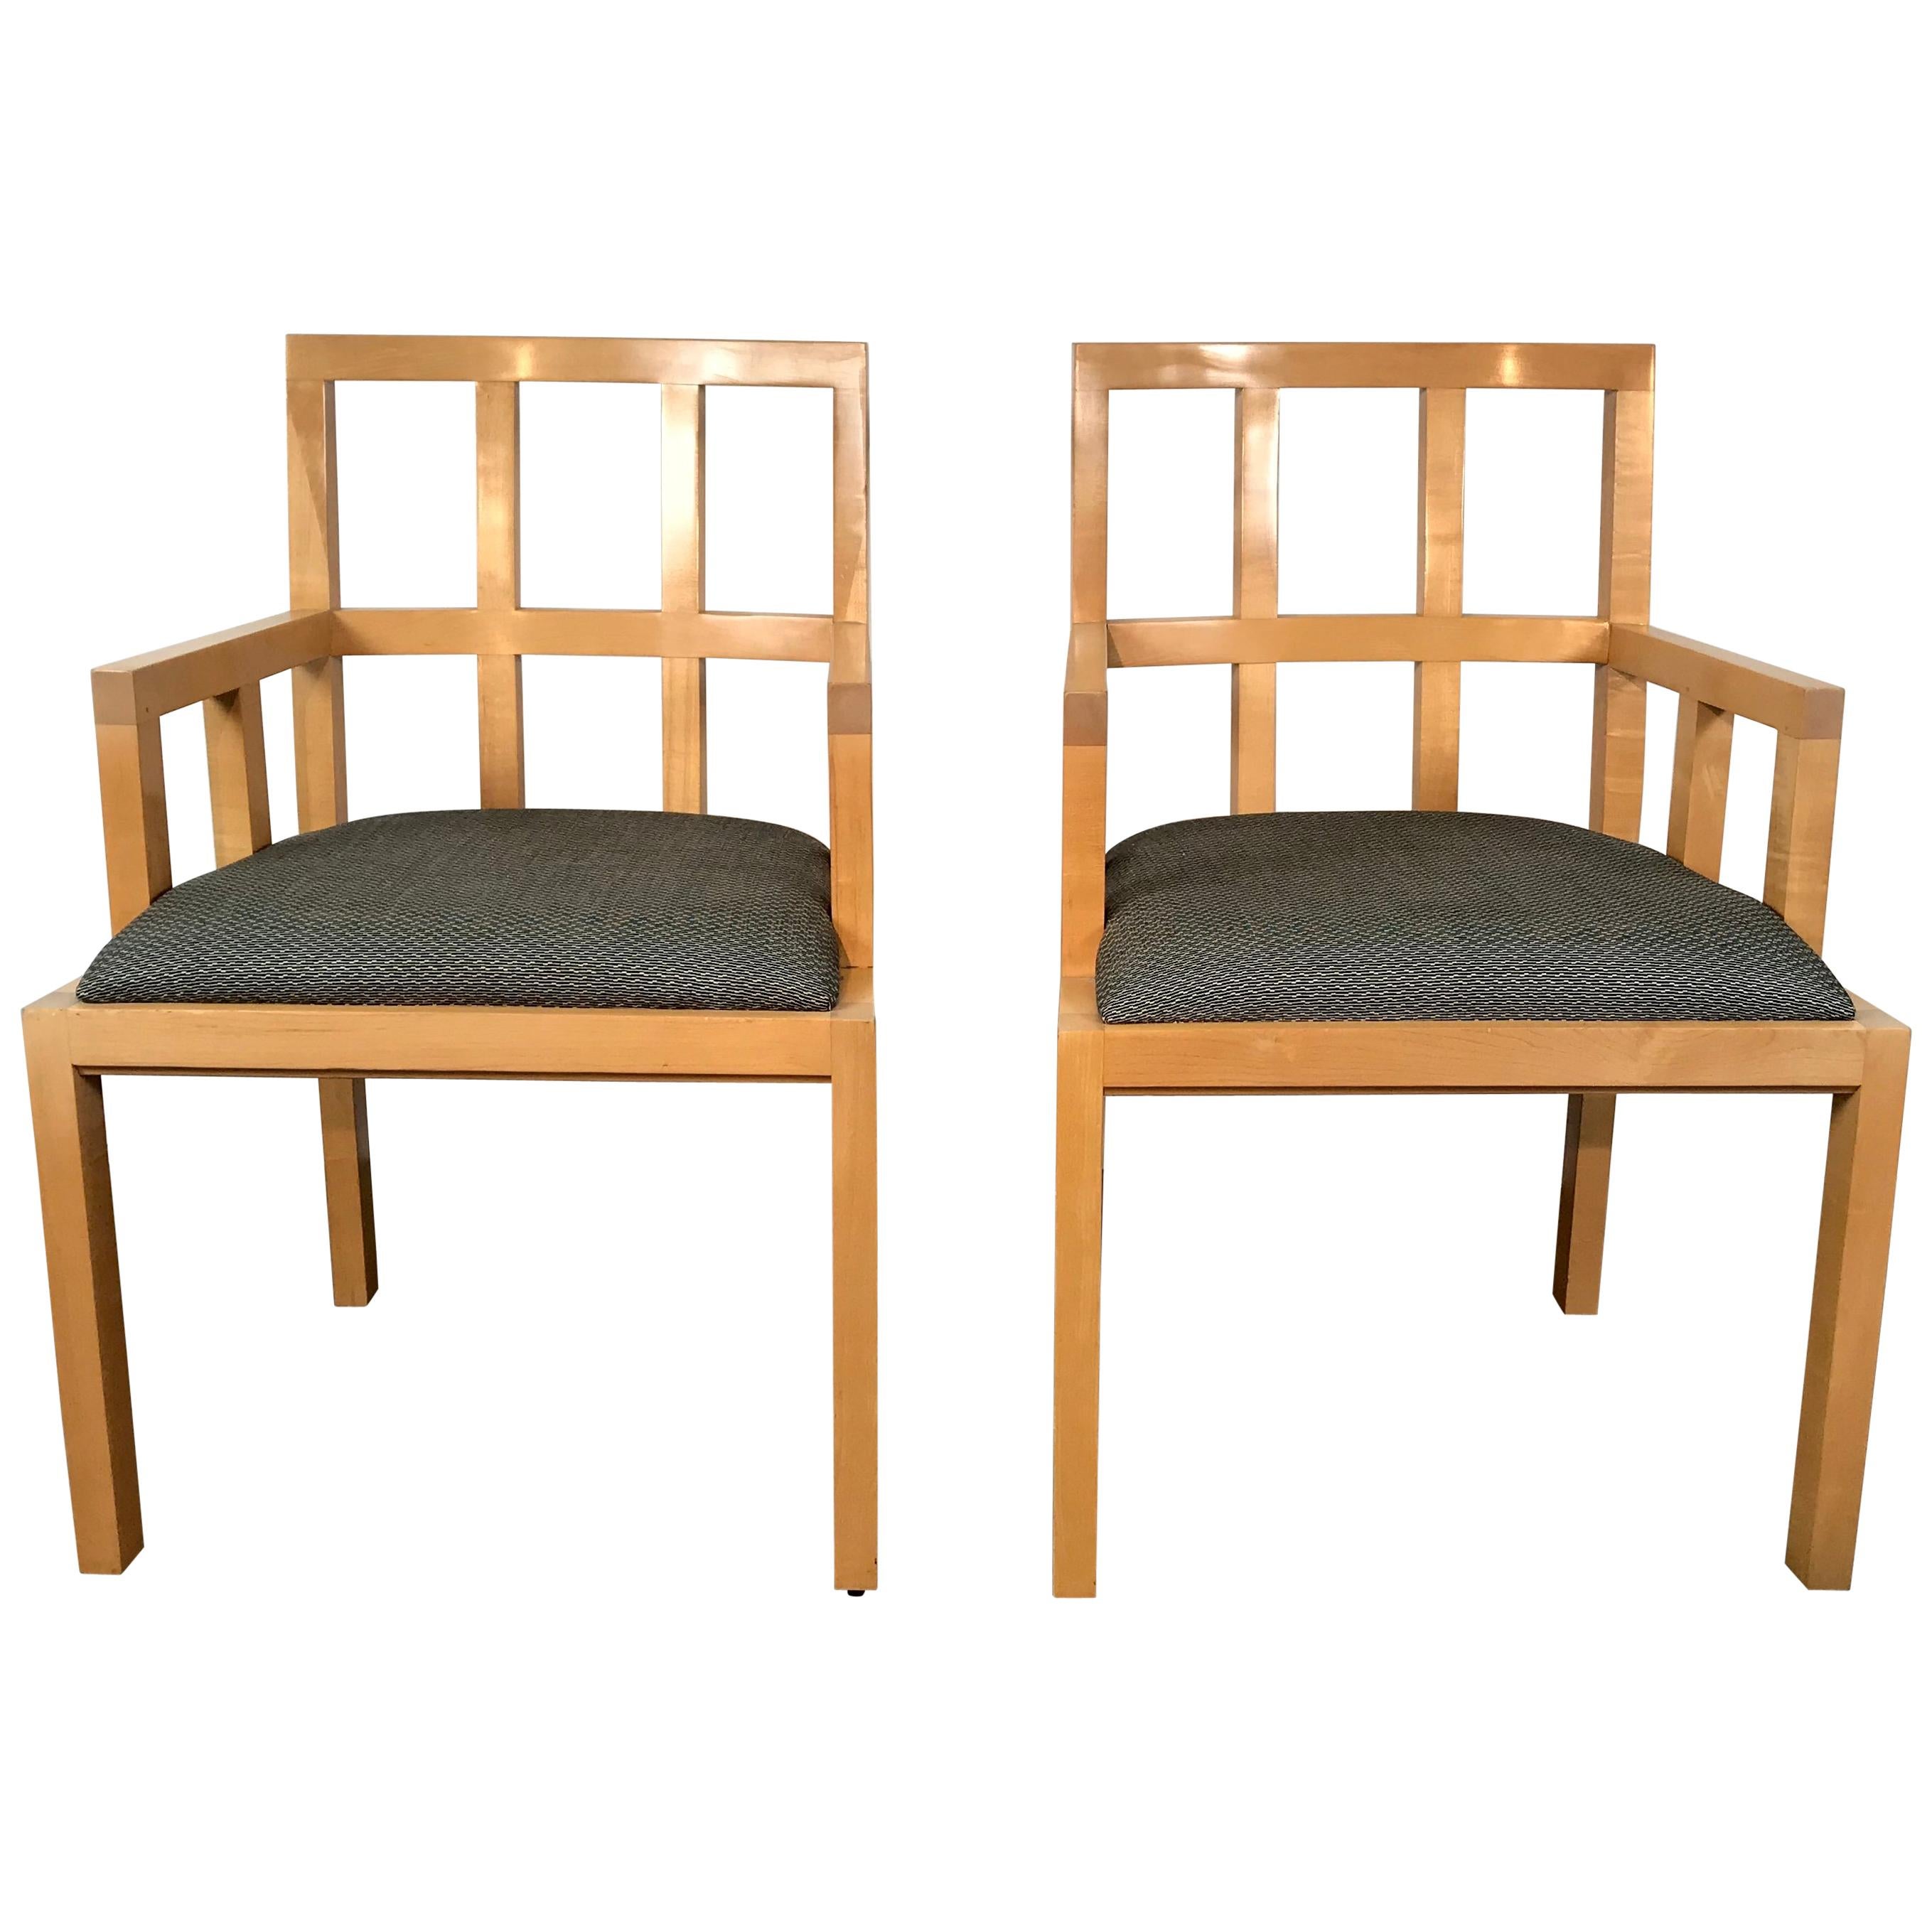 Stunning Pair of Contemporary Modern Birch Arm Chairs, Bernhardt Furniture Co.